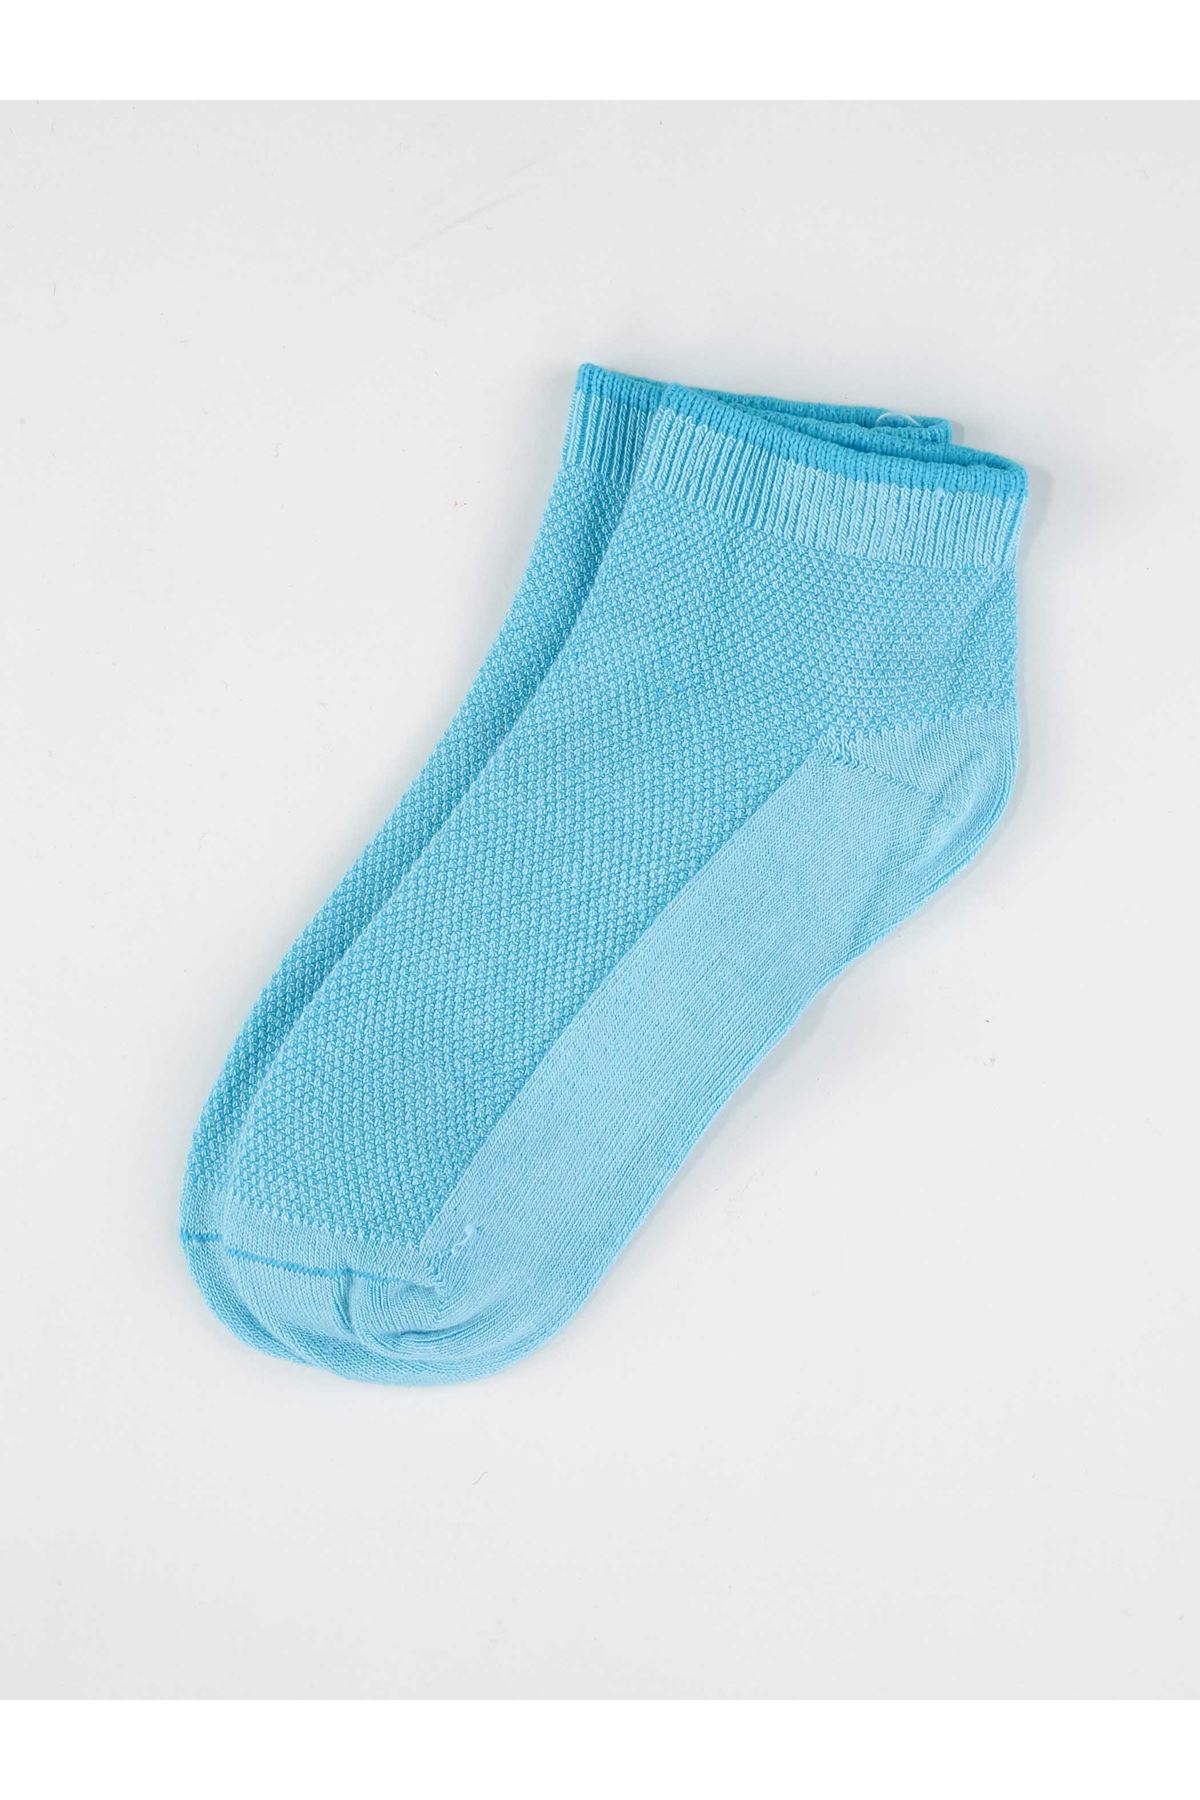 Blue Bamboo Girl's Booties Socks